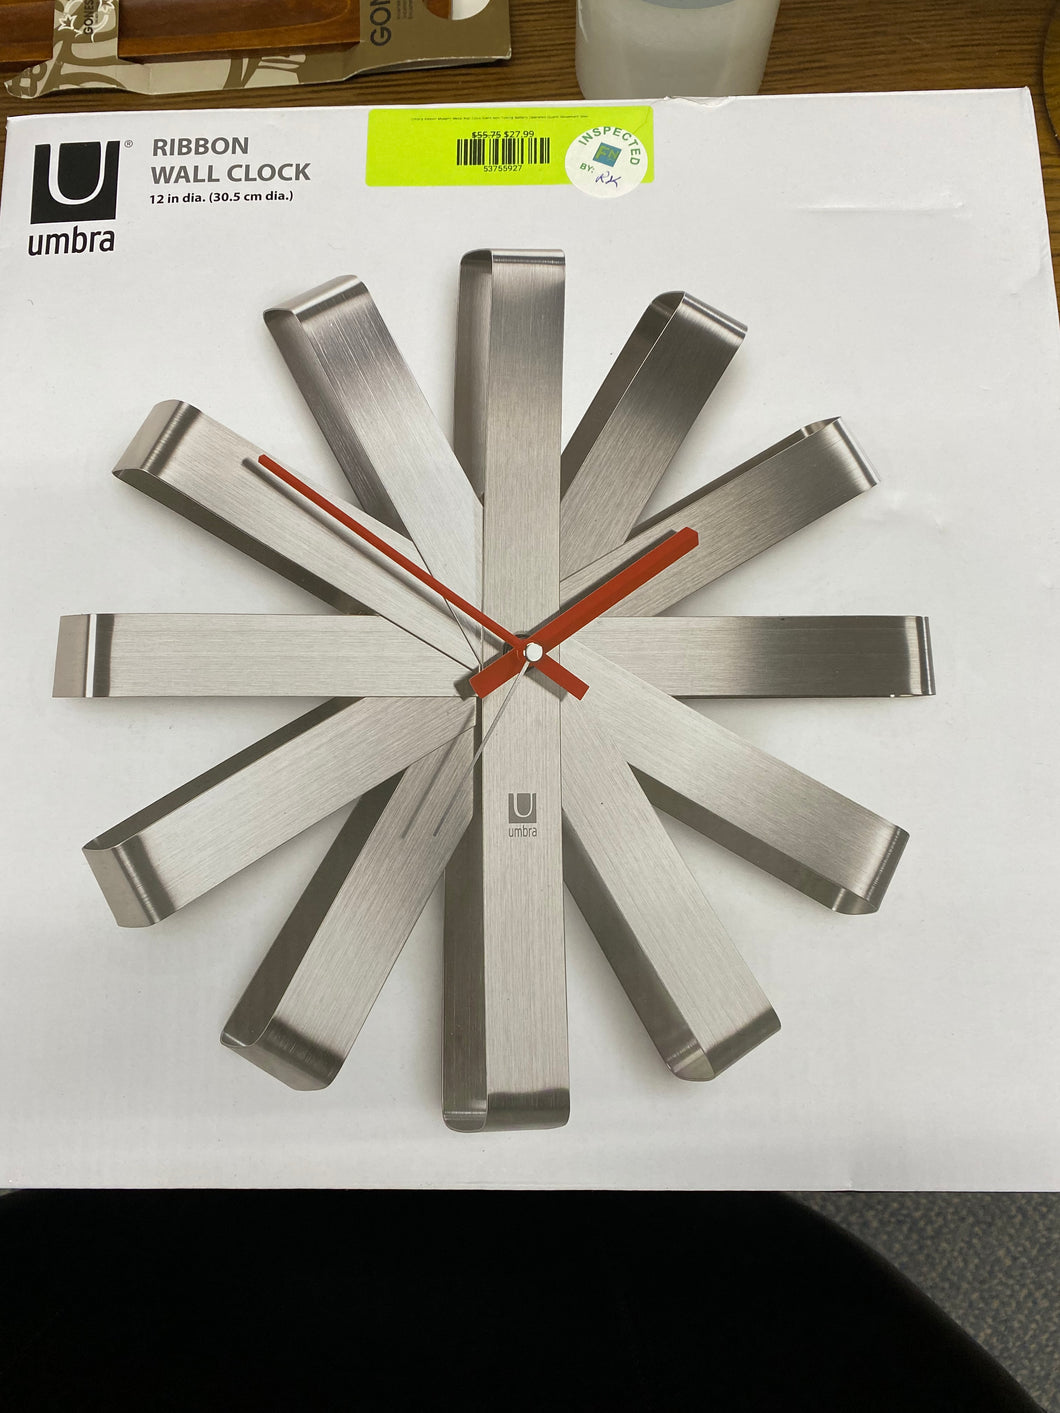 Umbra Ribbon Modern Metal Wall Clock Silent Non Ticking Battery Operated Quartz Movement Steel